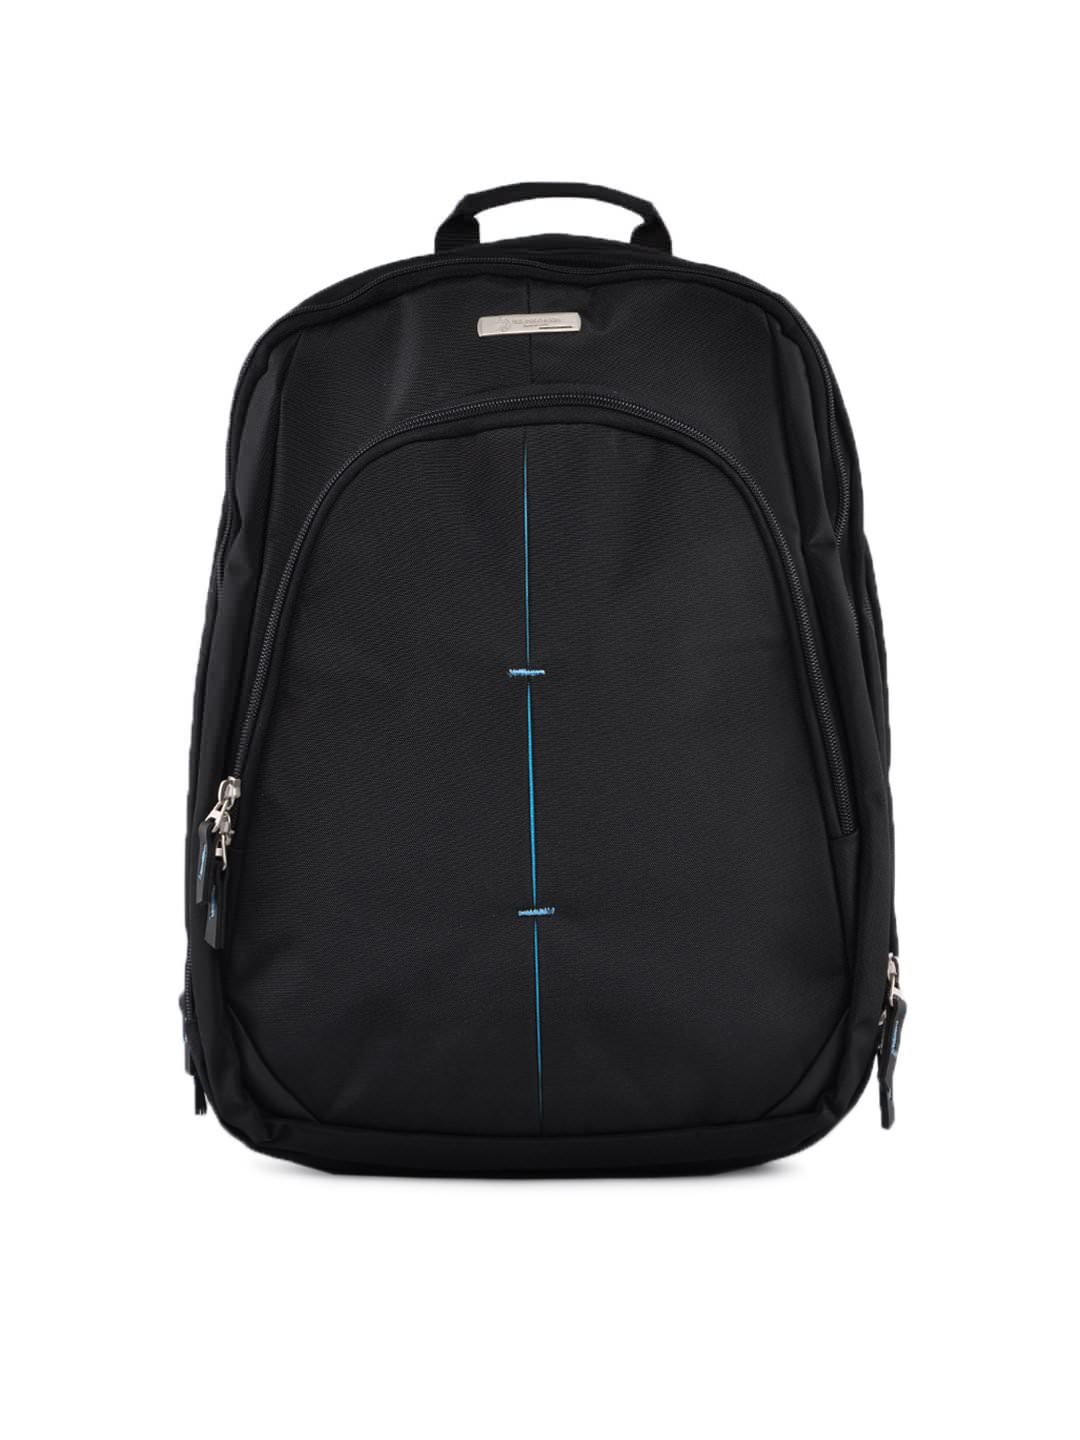 U.S. Polo Assn. Unisex Black Laptop Bag